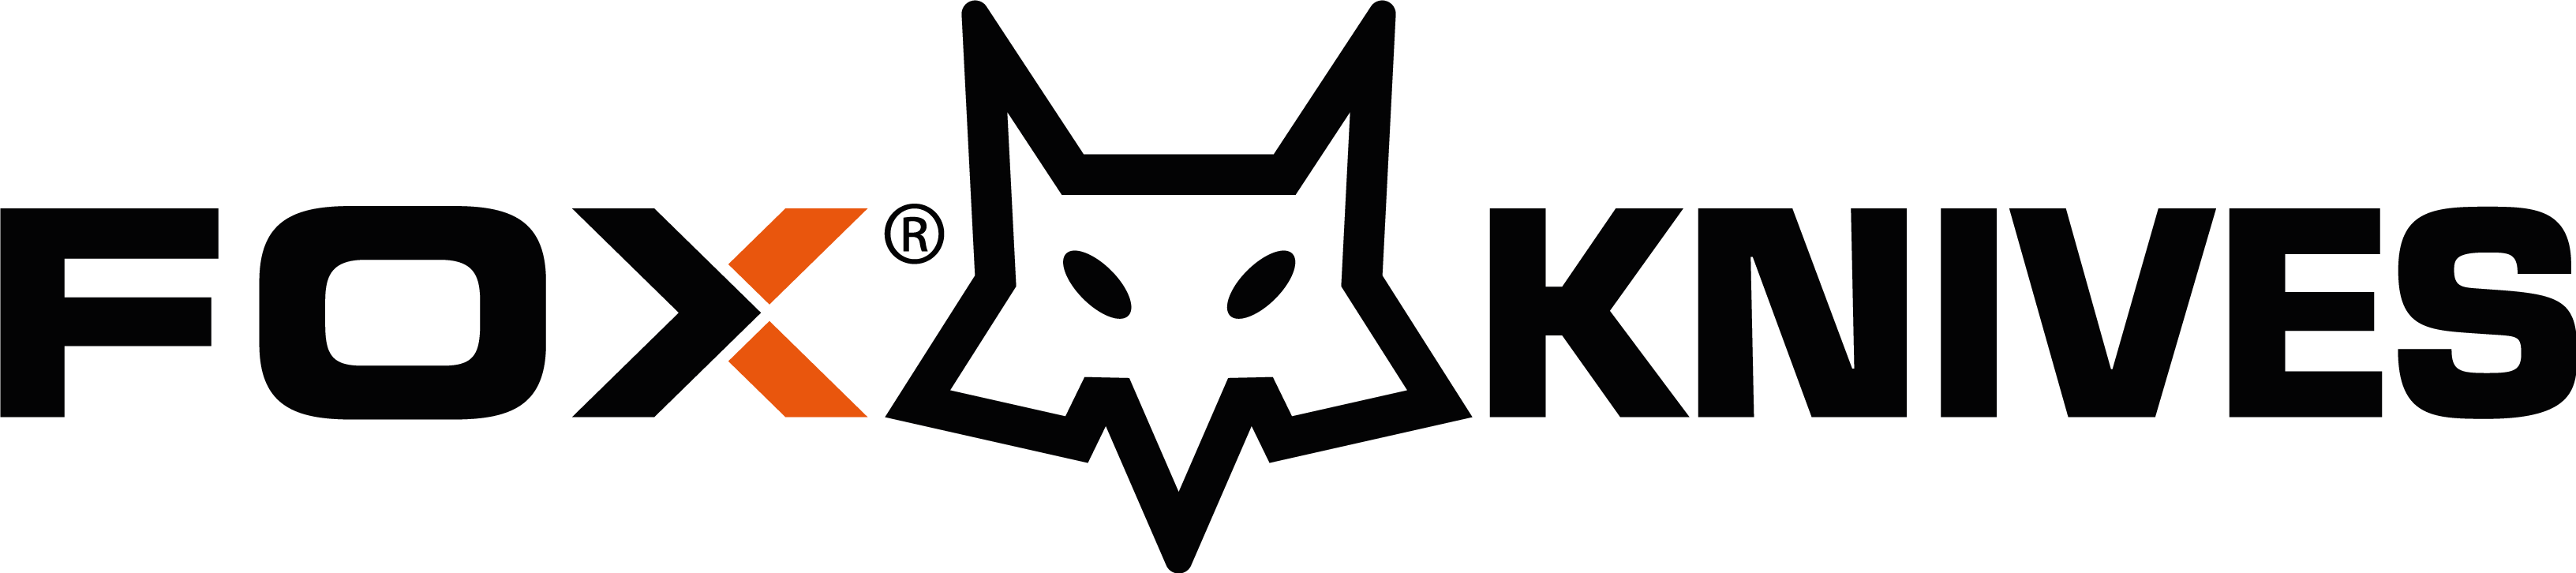 cropped-FOX-Knives-logo-orizzontale-nero-e-arancione.png